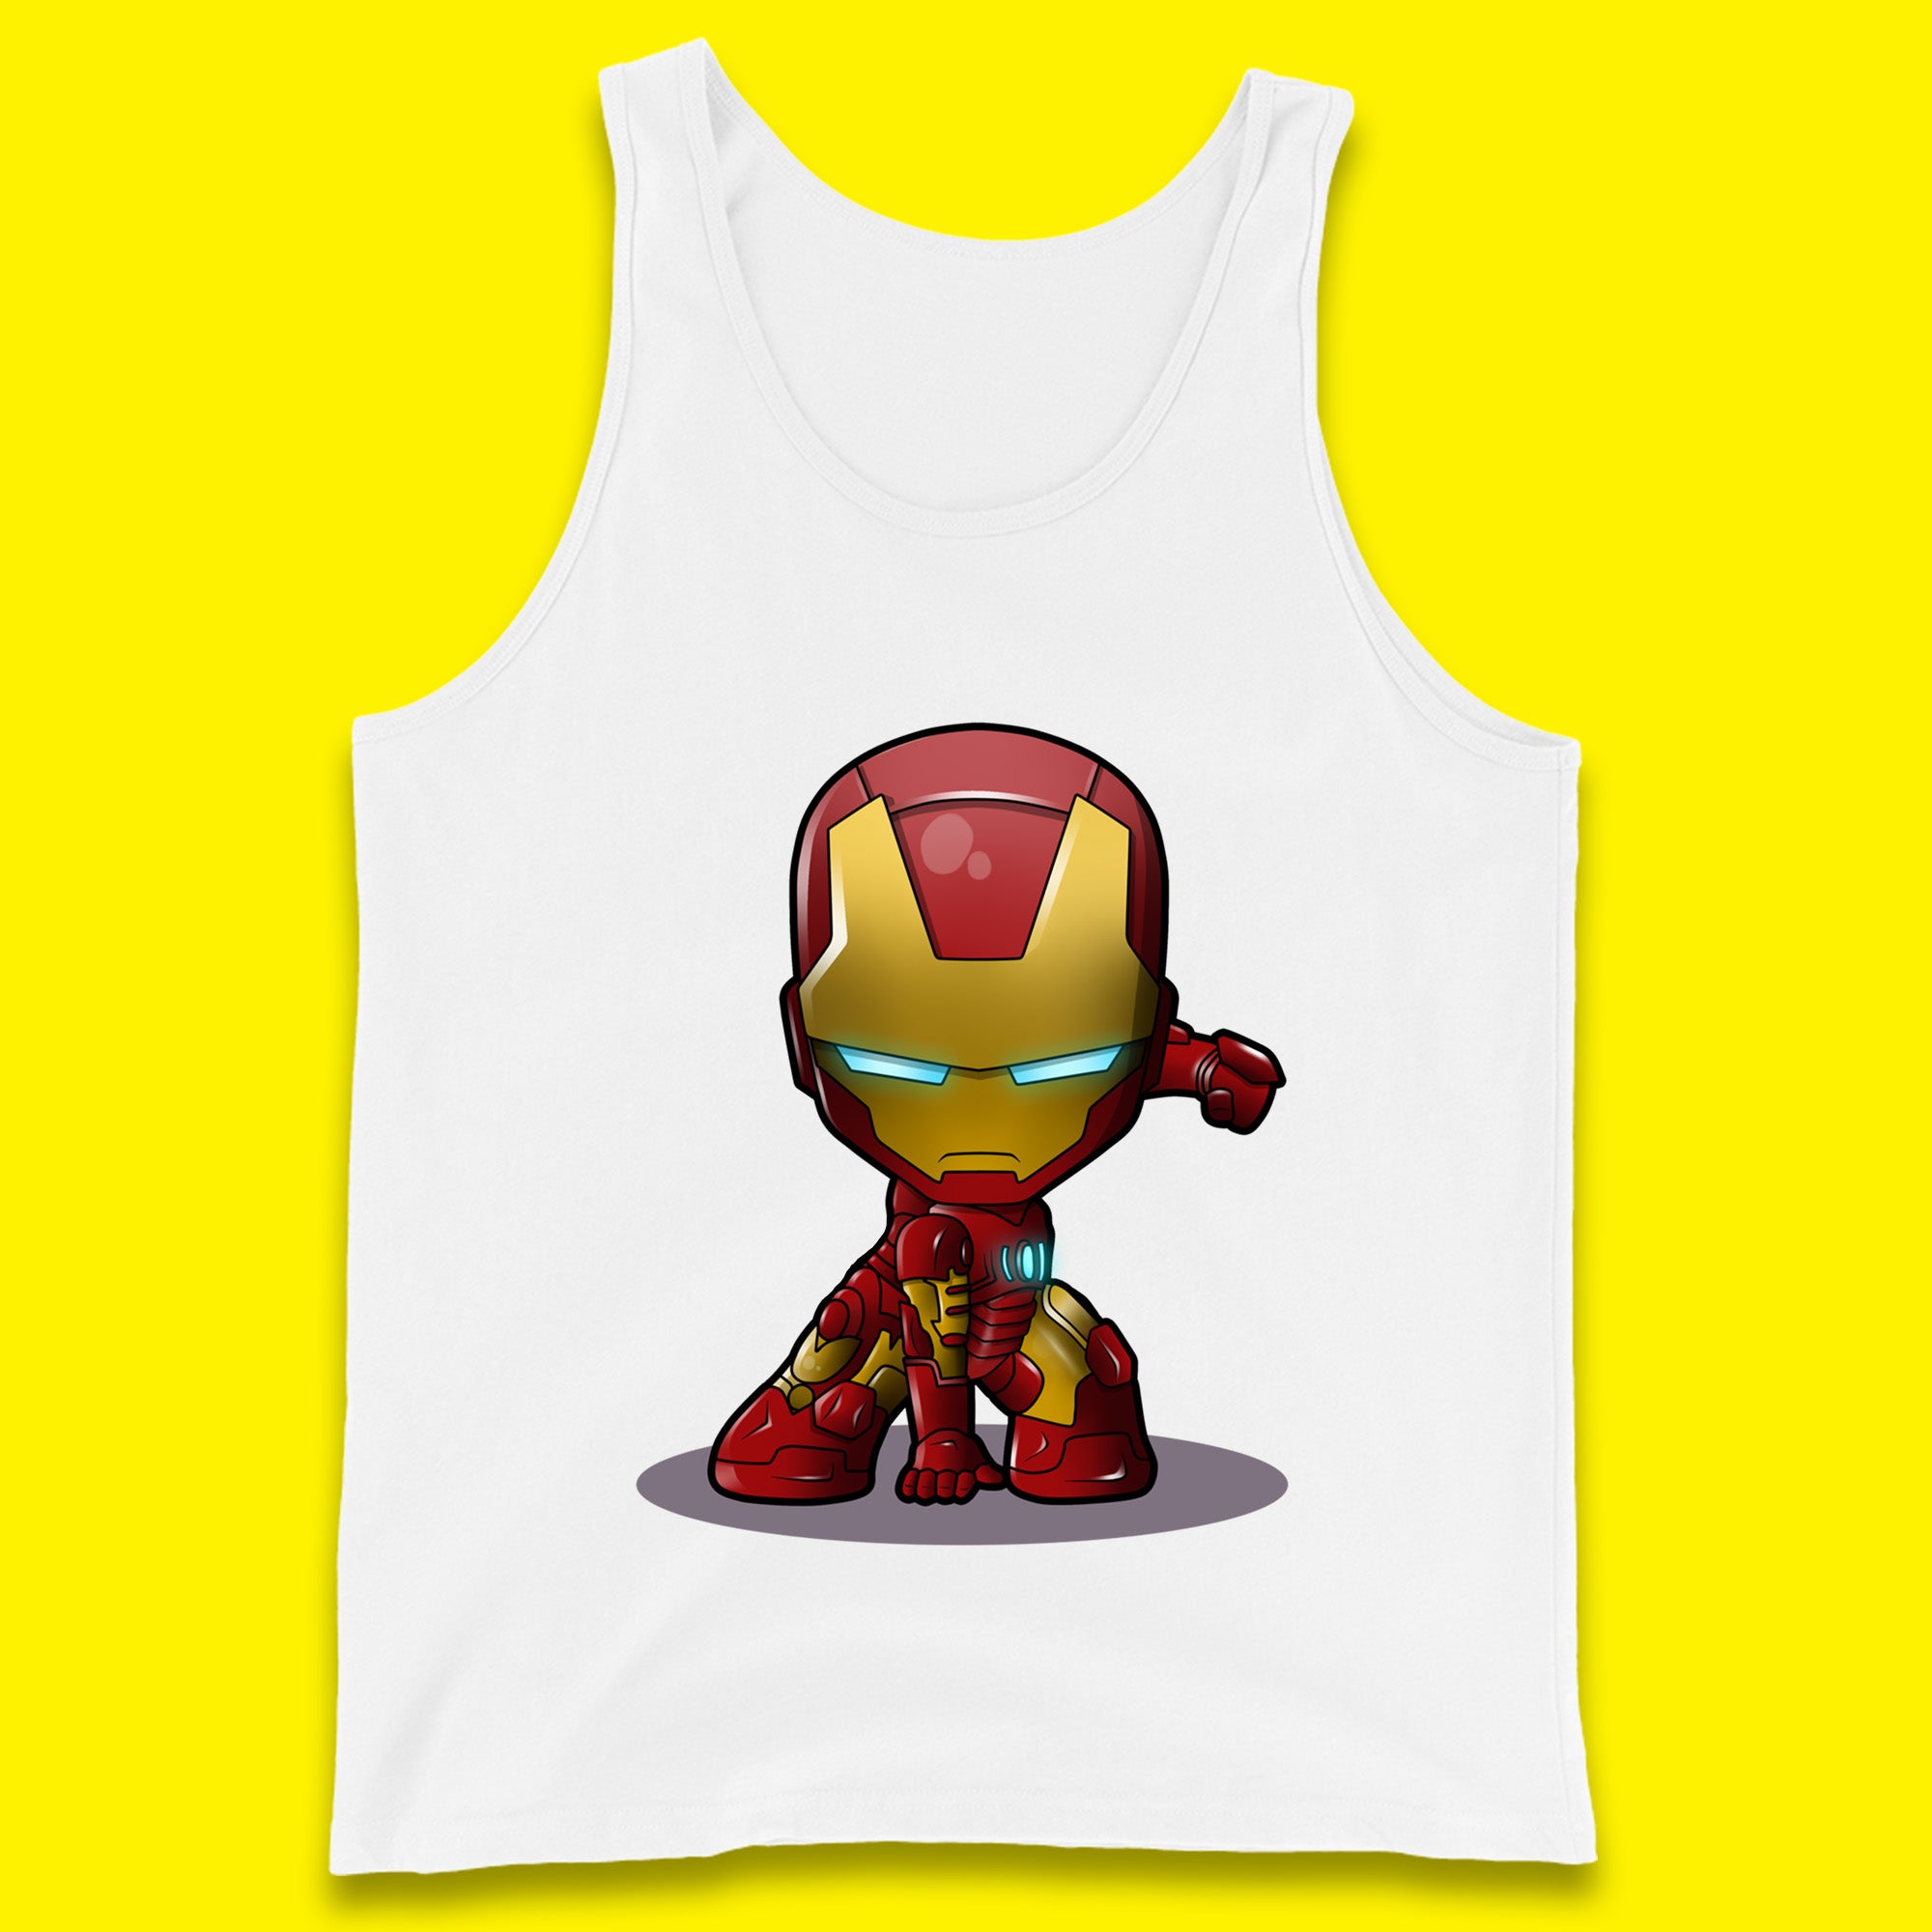 Marvel Avenger Iron Man Movie Character Ironman Costume Superhero Marvel Comics Tank Top